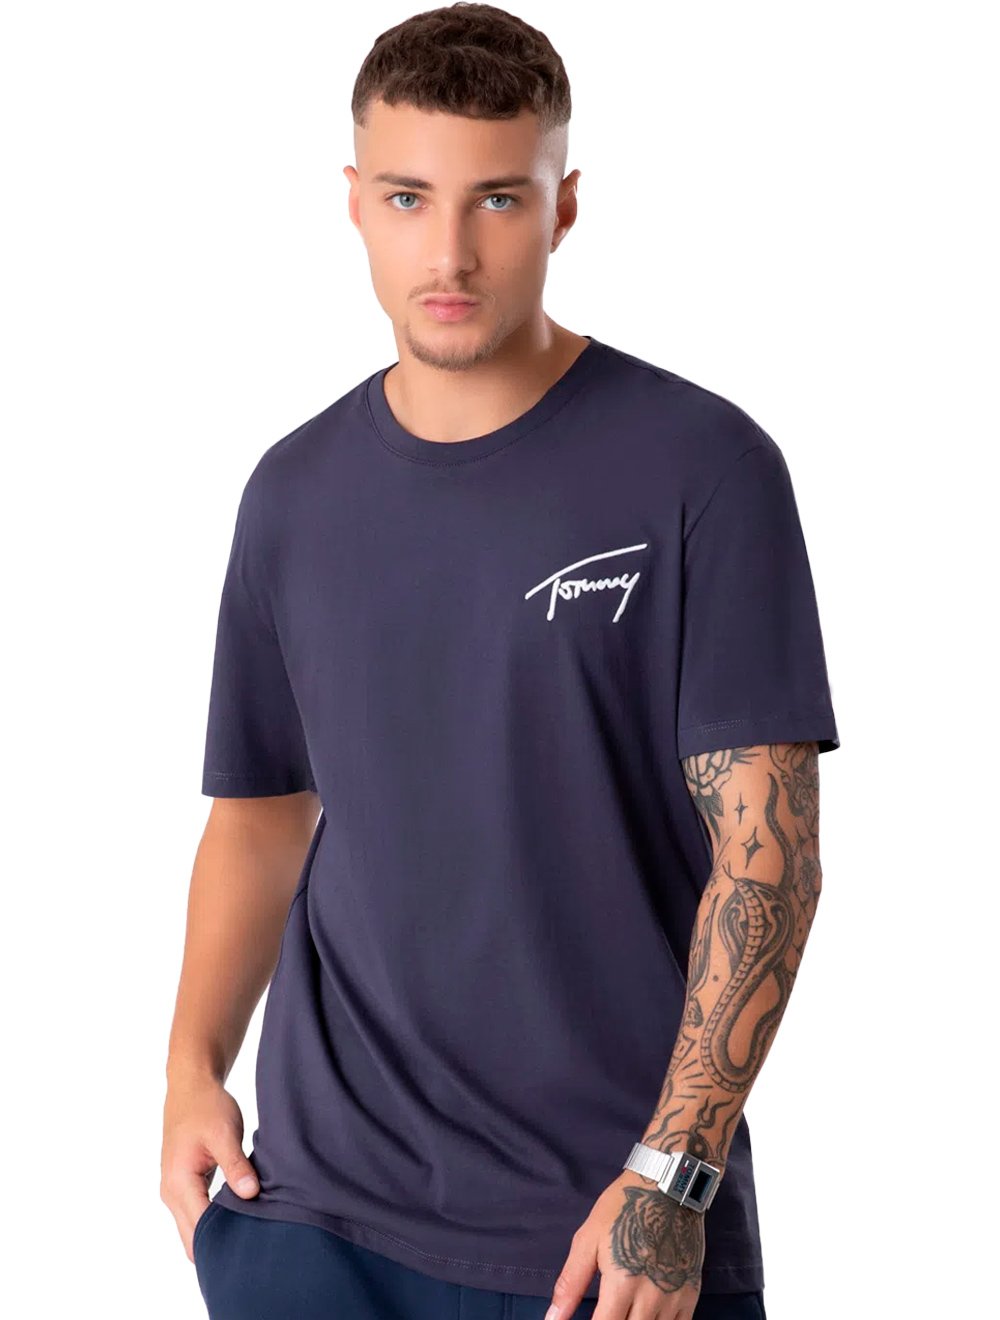 Camiseta Tommy Jeans Masculina Embroidered Signature Azul Marinho